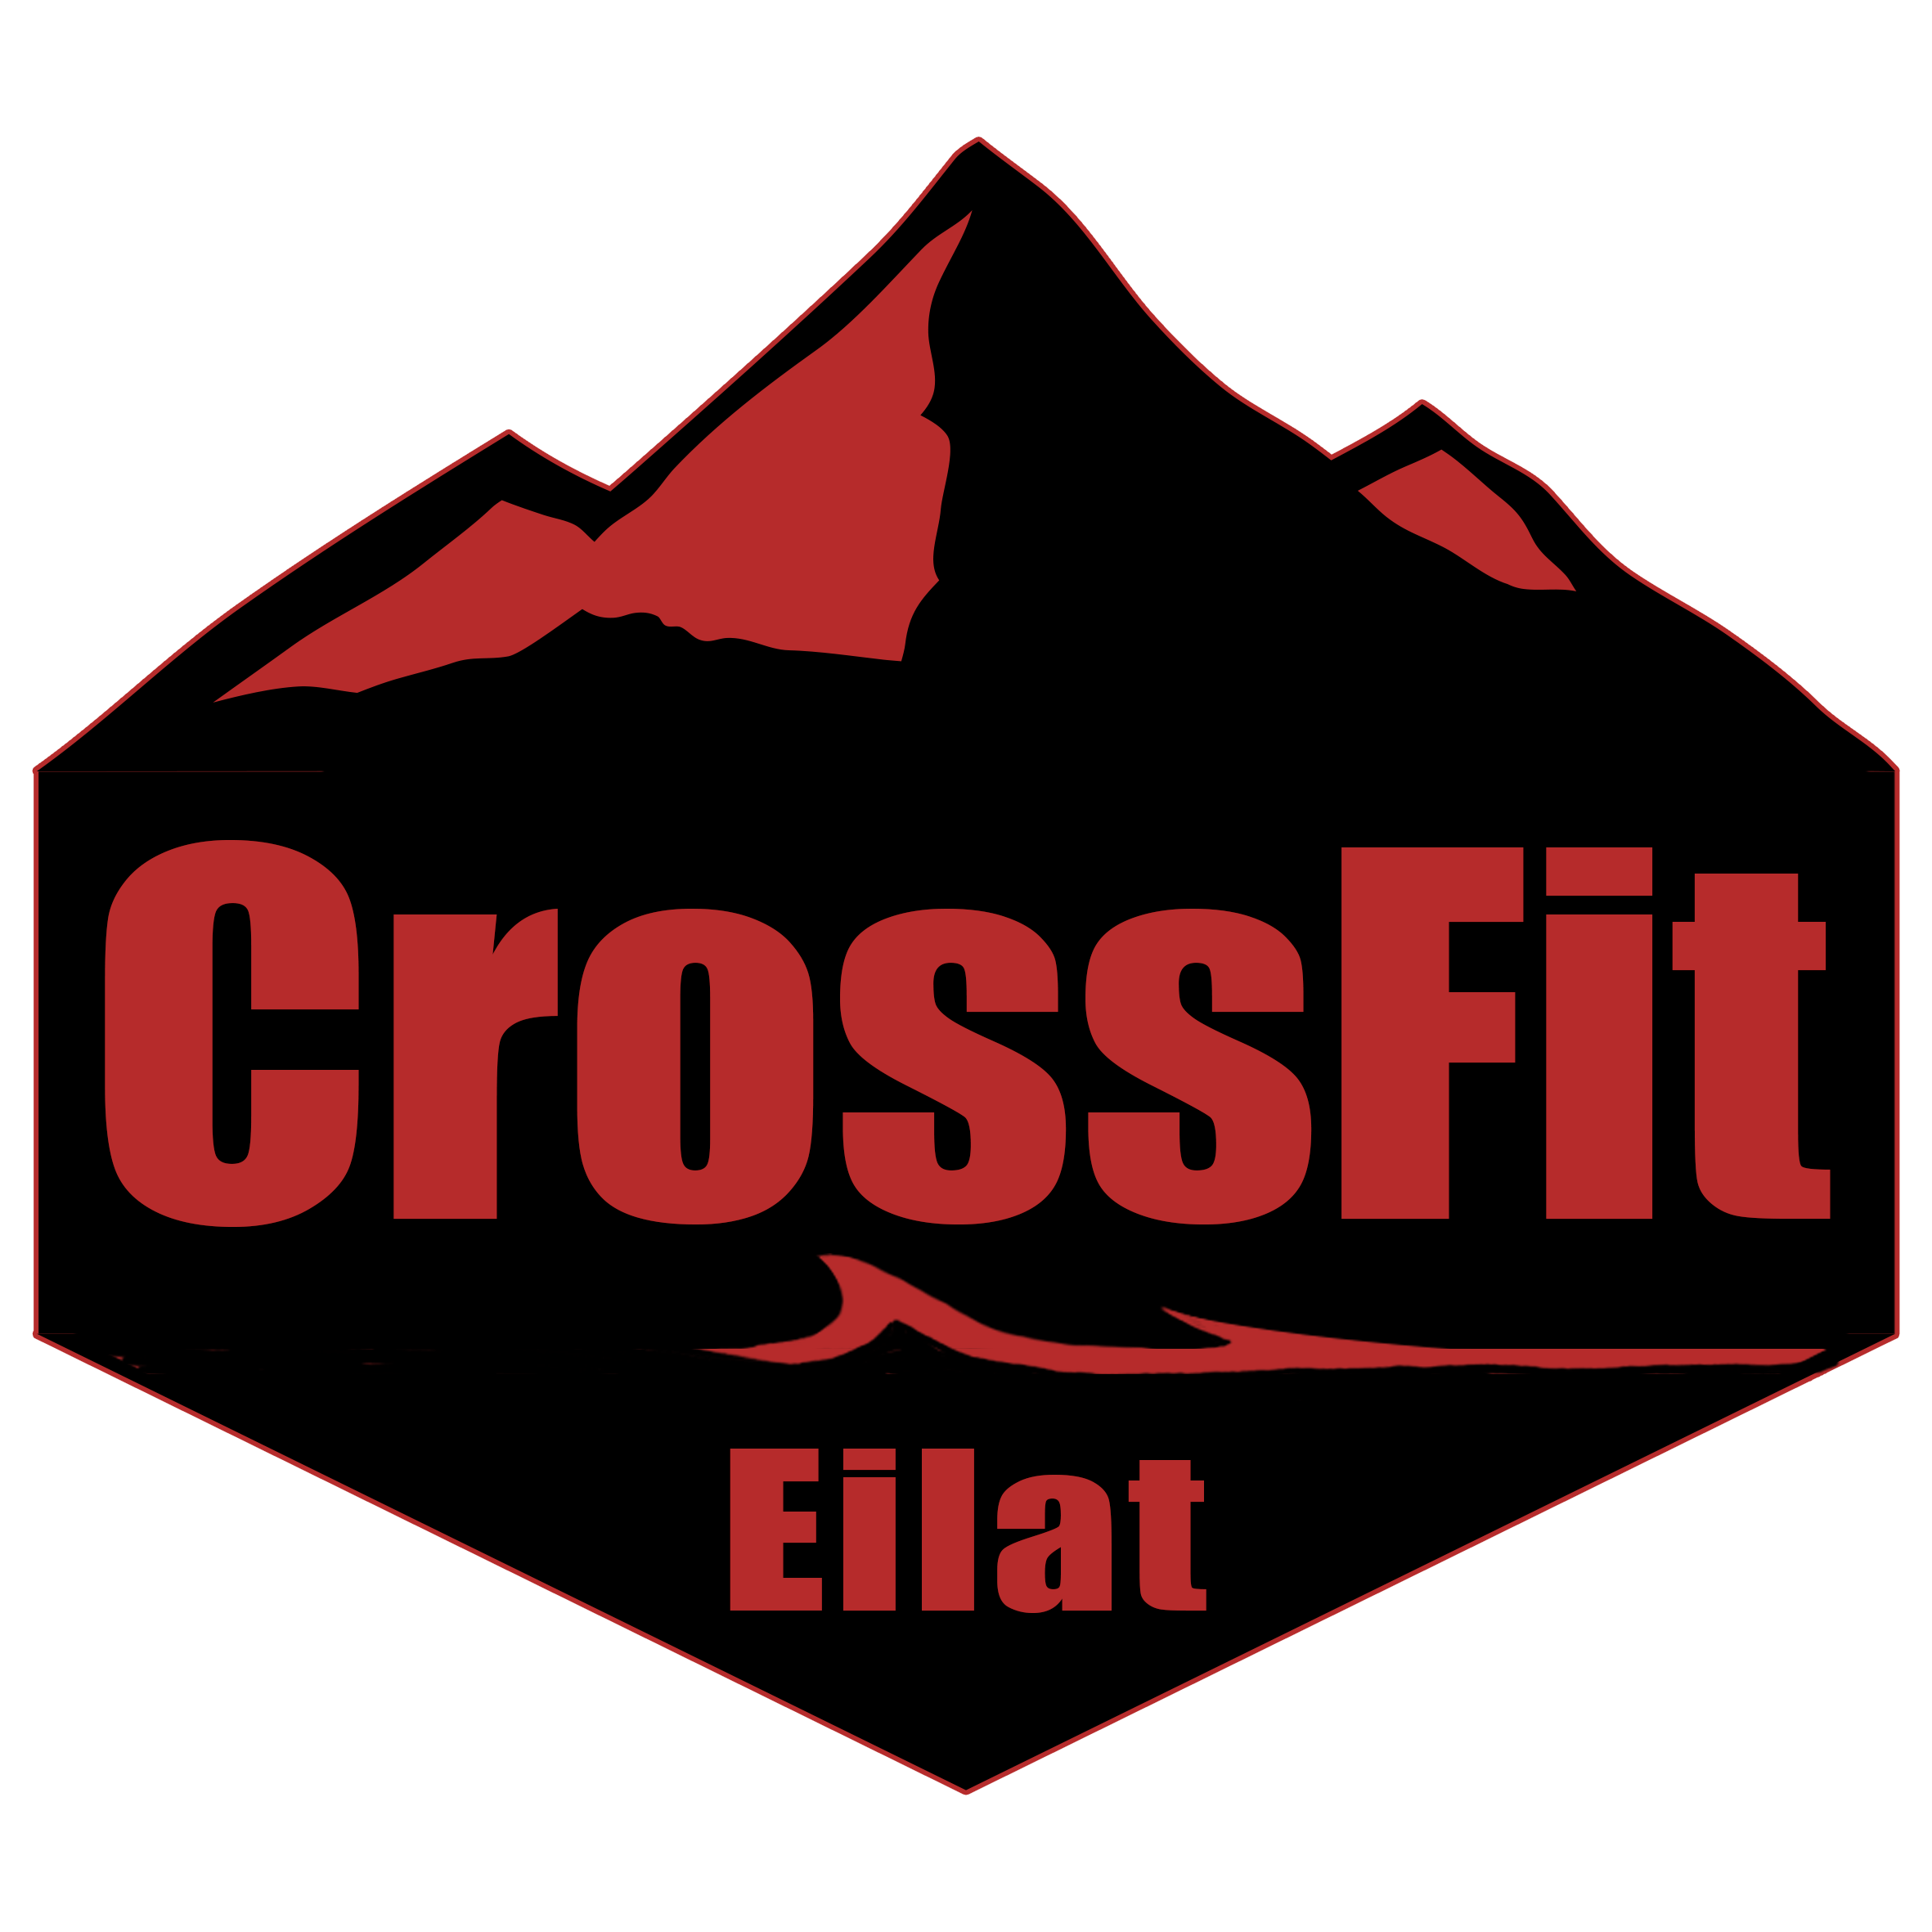 Crossfit Eilat logo